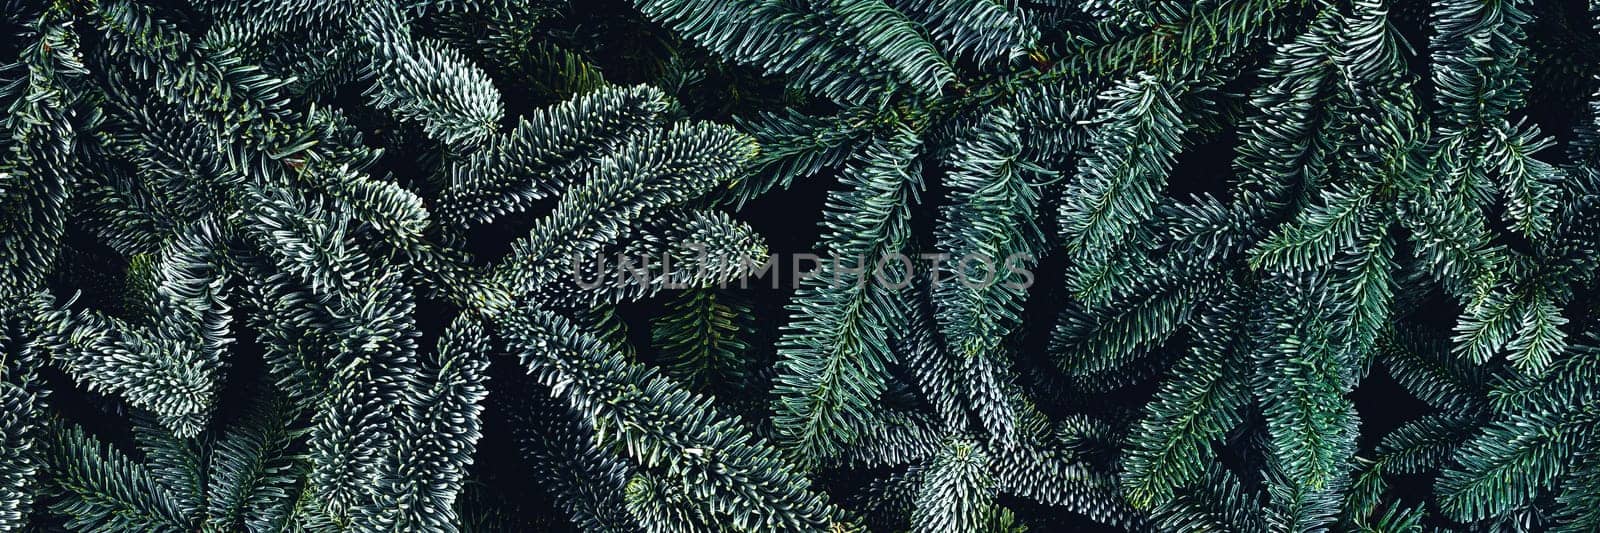 Green pine fir branches background. by AlexAbramova